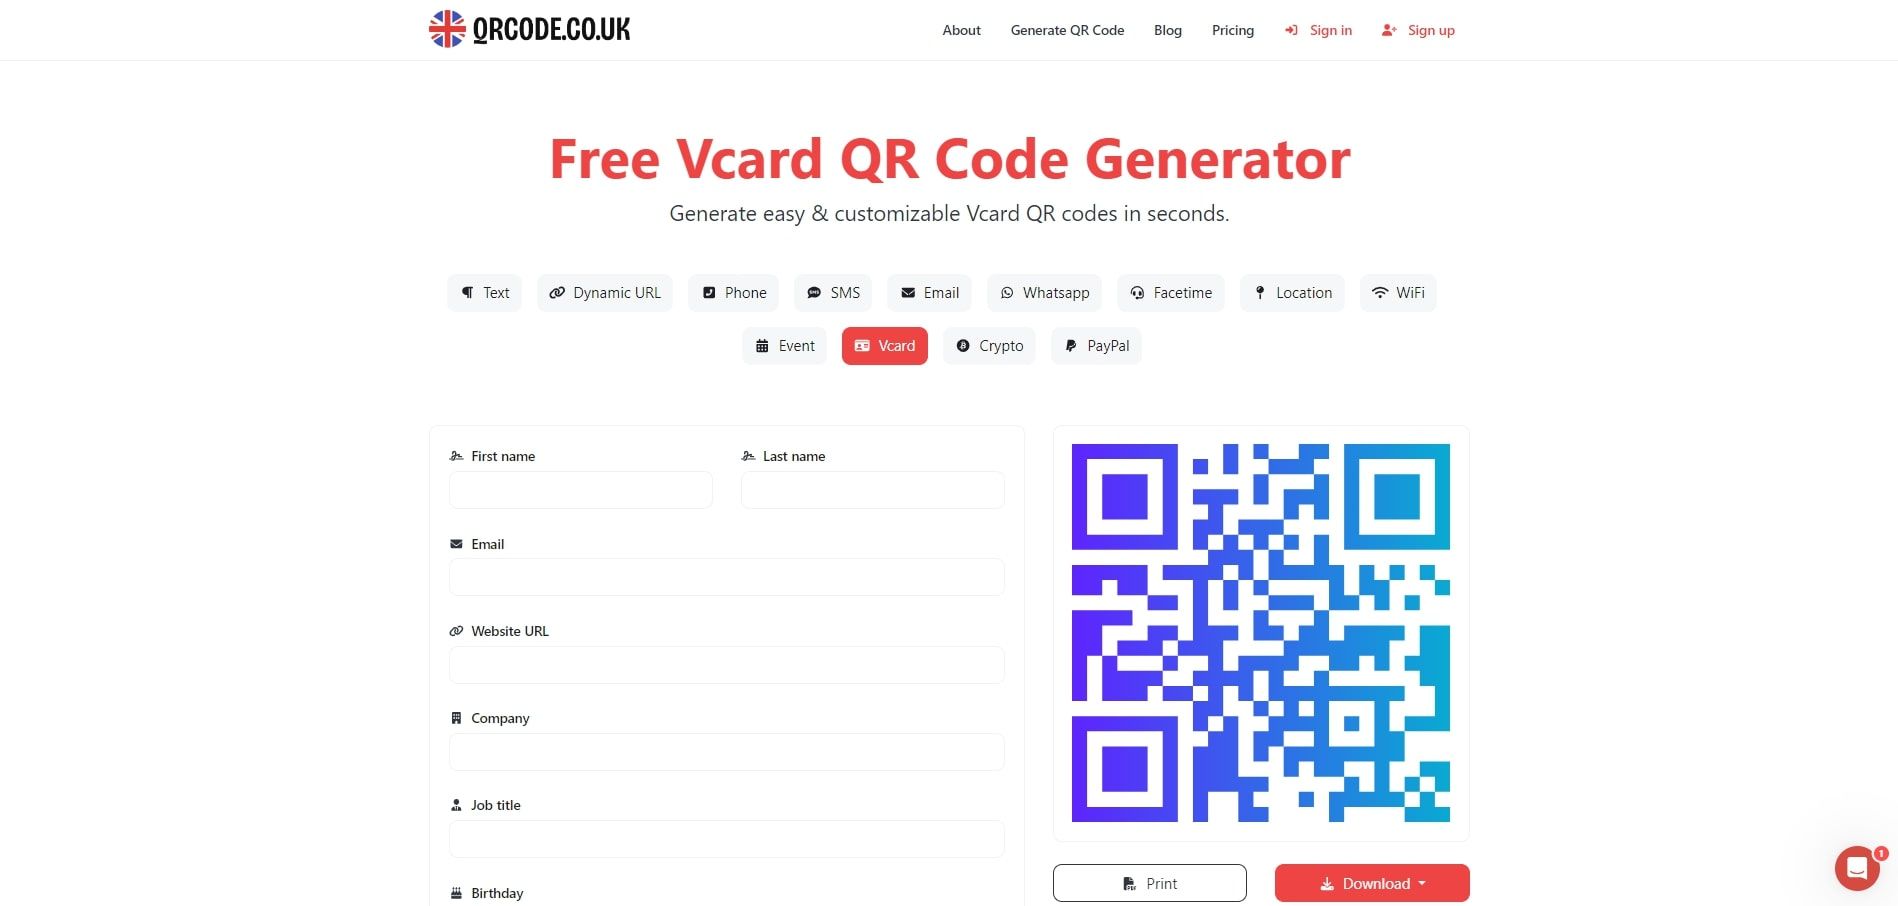 Free Vcard QR Code Generator